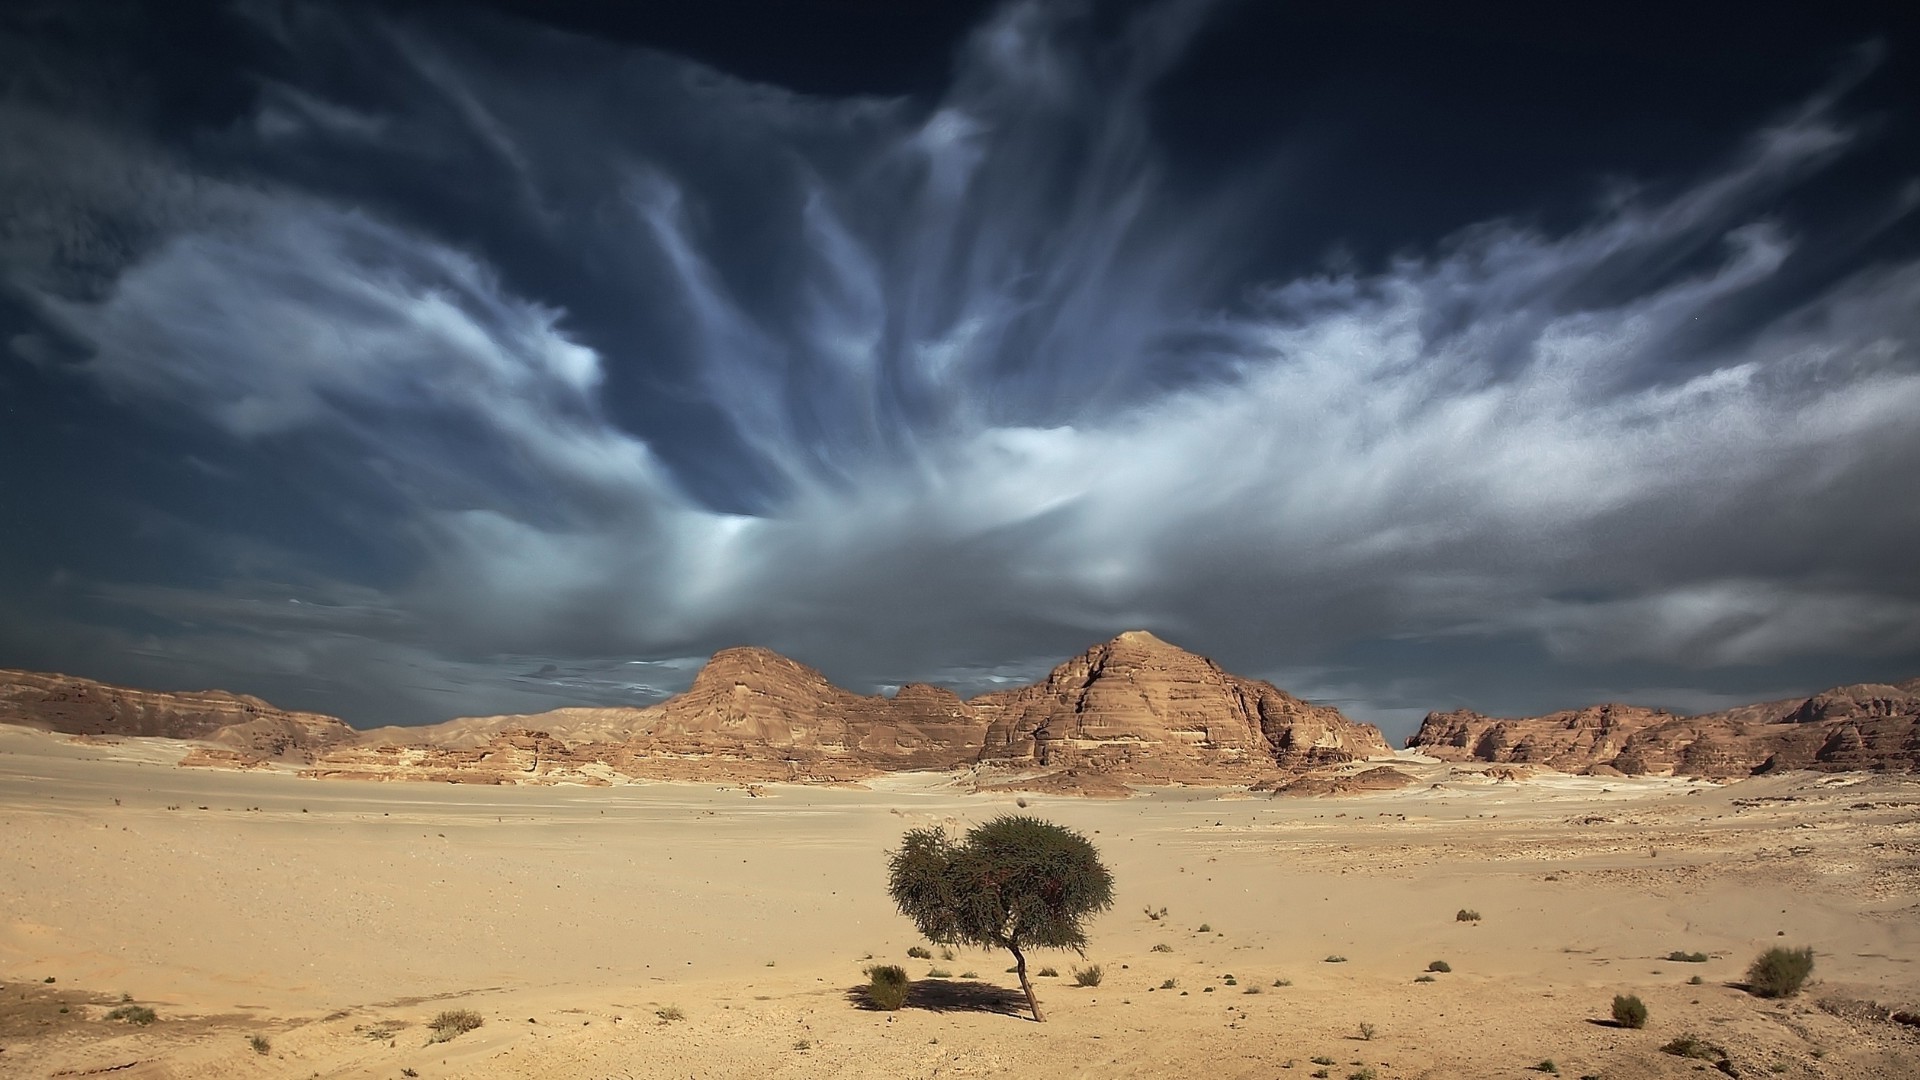 the wind desert sand travel sunset sky barren landscape arid dawn outdoors sun hot dune storm dry water remote